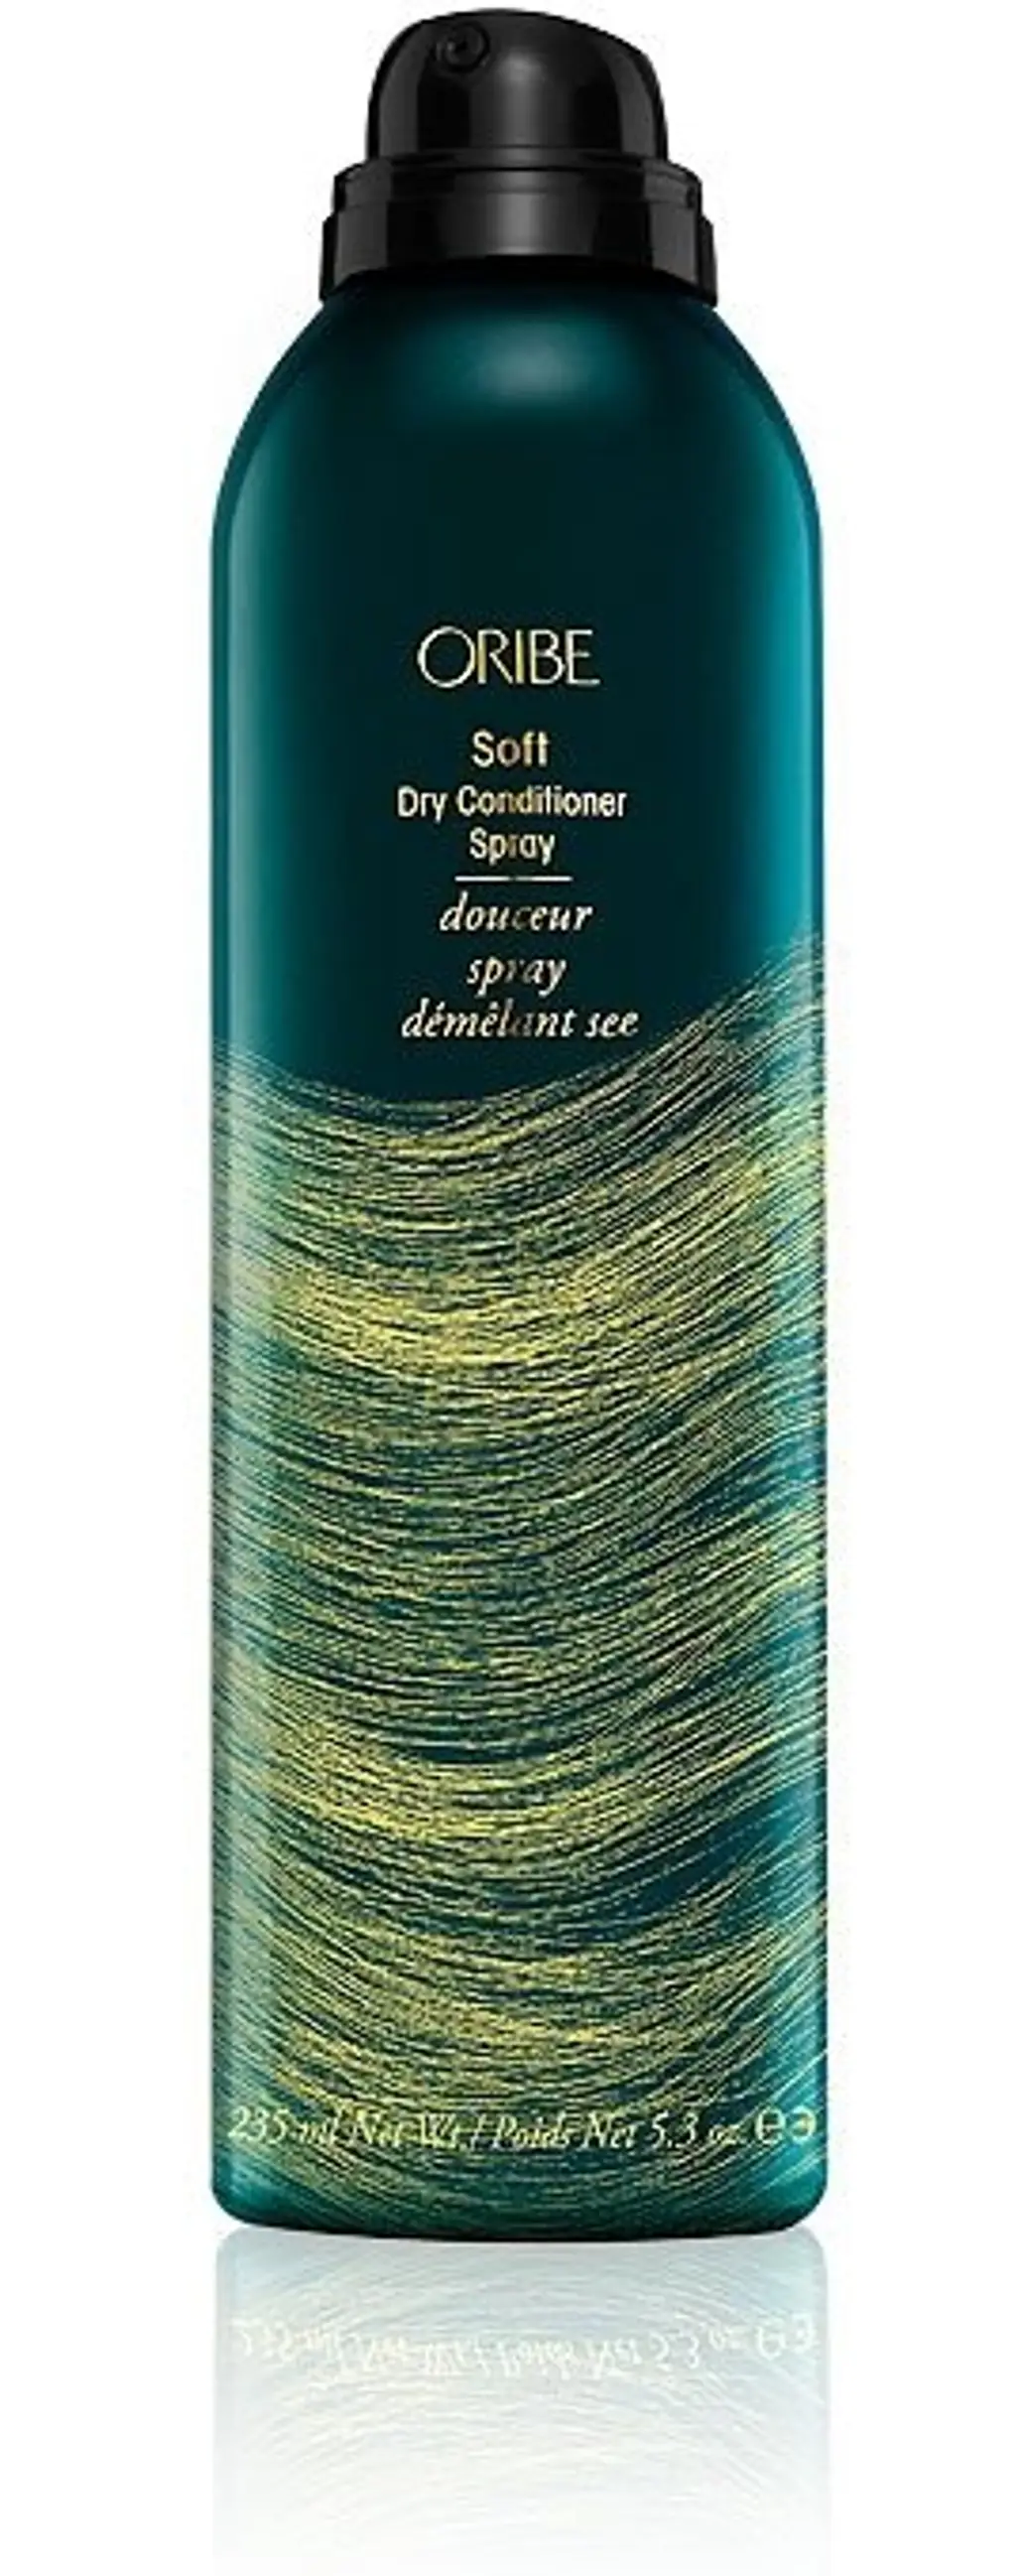 Oribe – Soft Dry Conditioner Spray